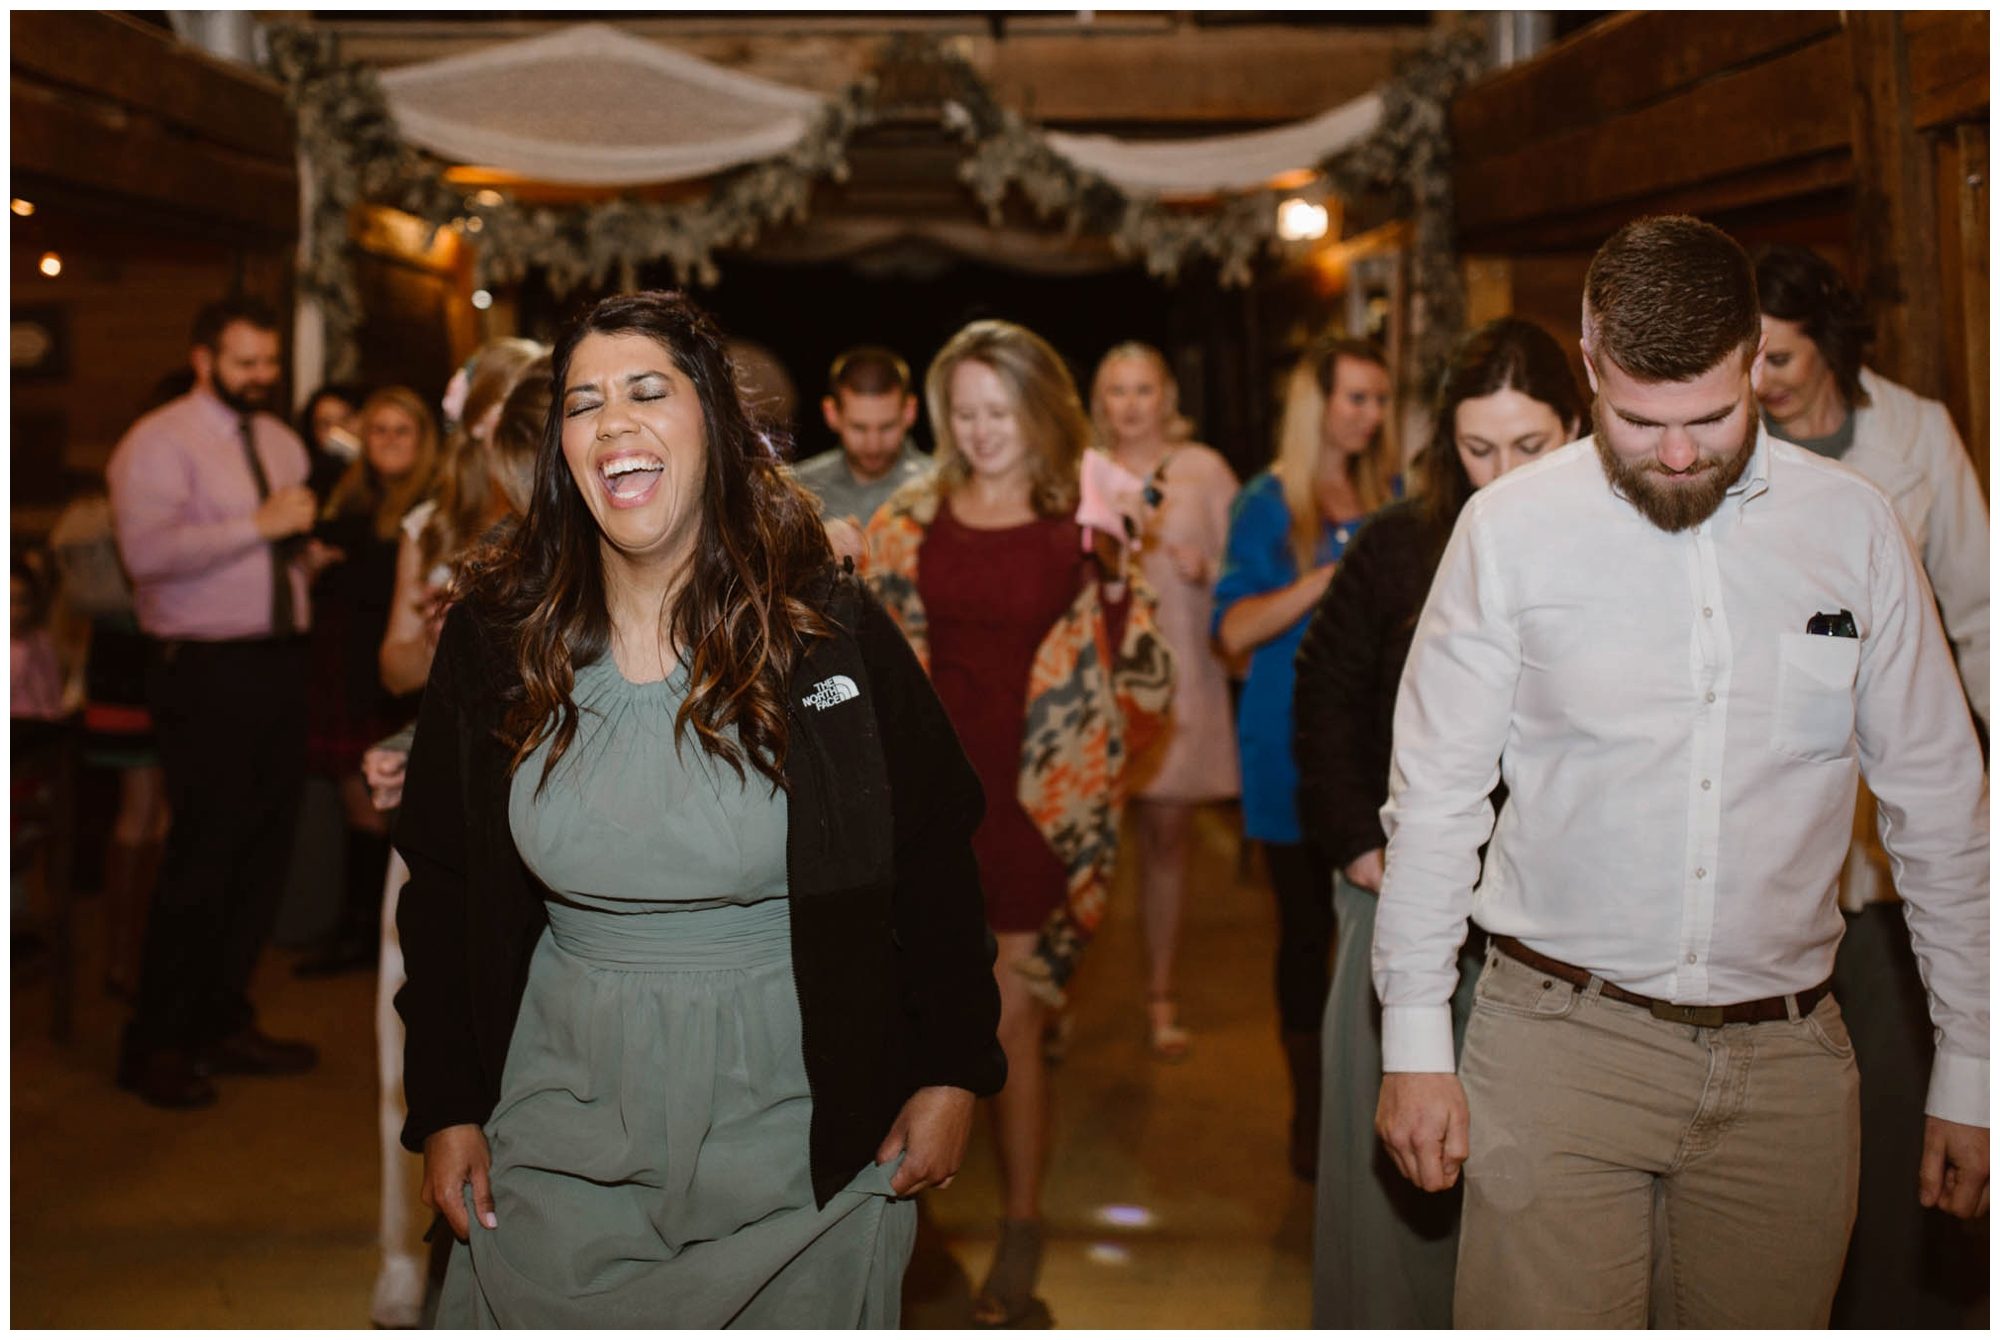 guests dancing at wedding reception in barn